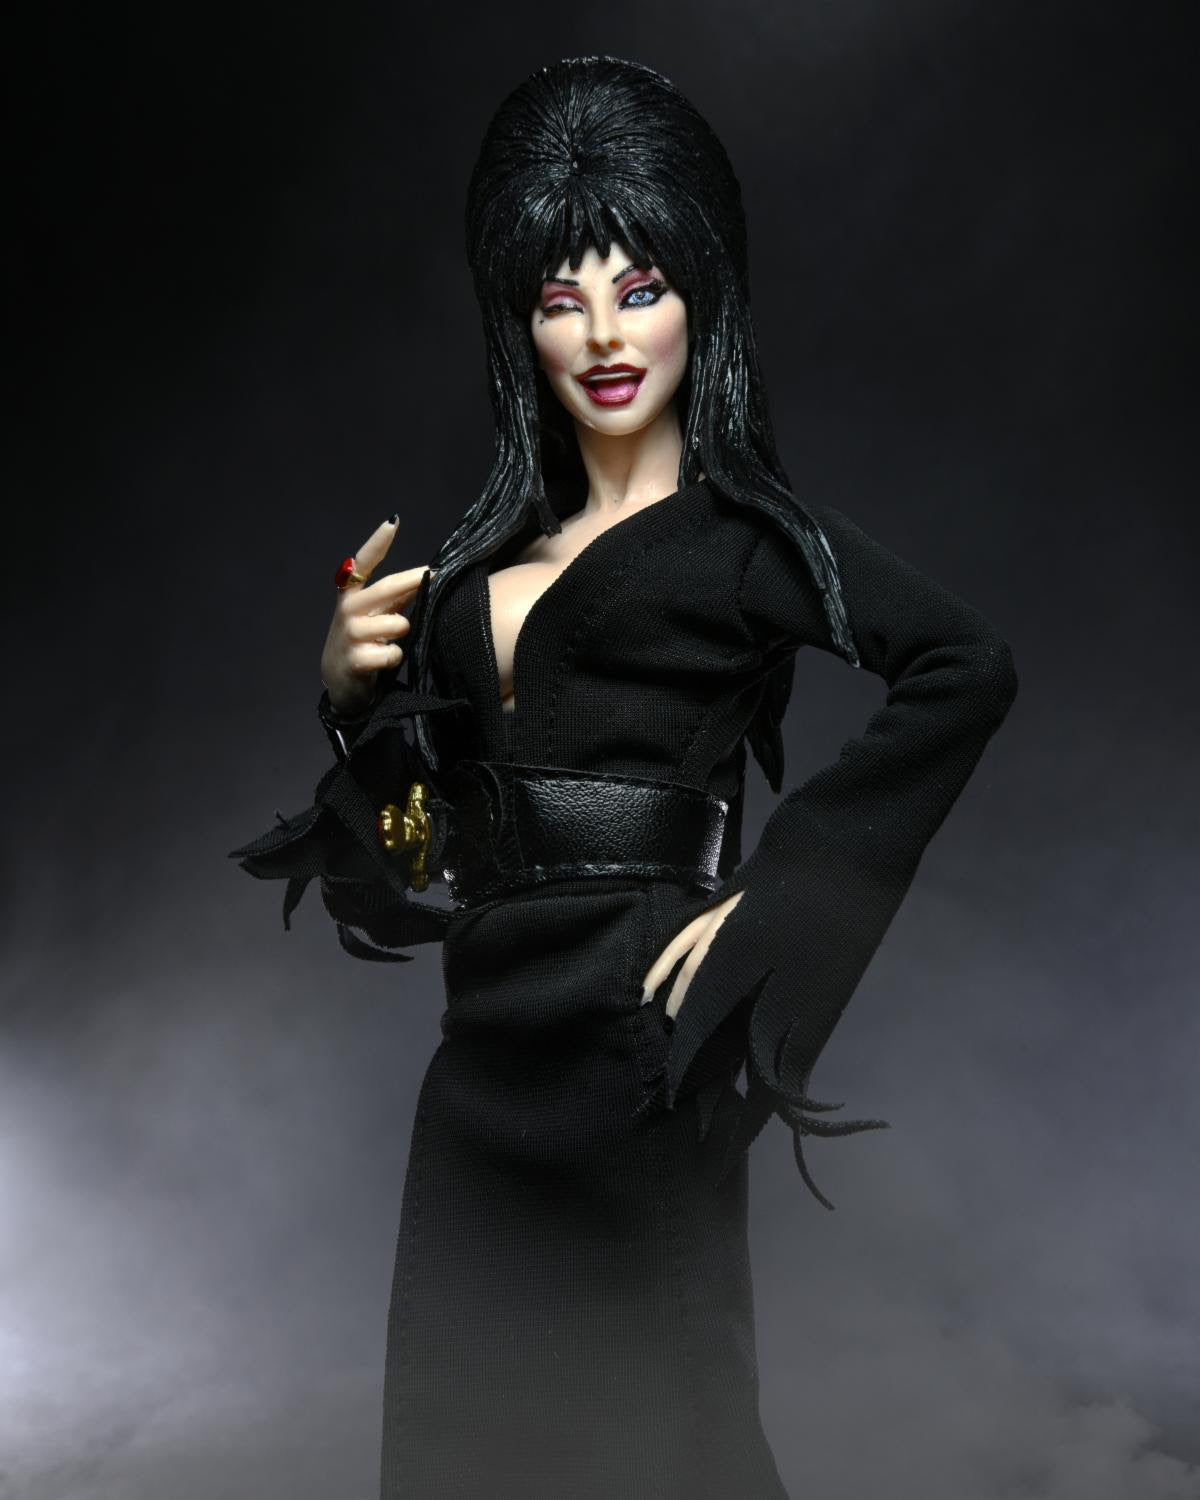 NECA - Elvira - 8" Scale Clothed Figure - Elvira